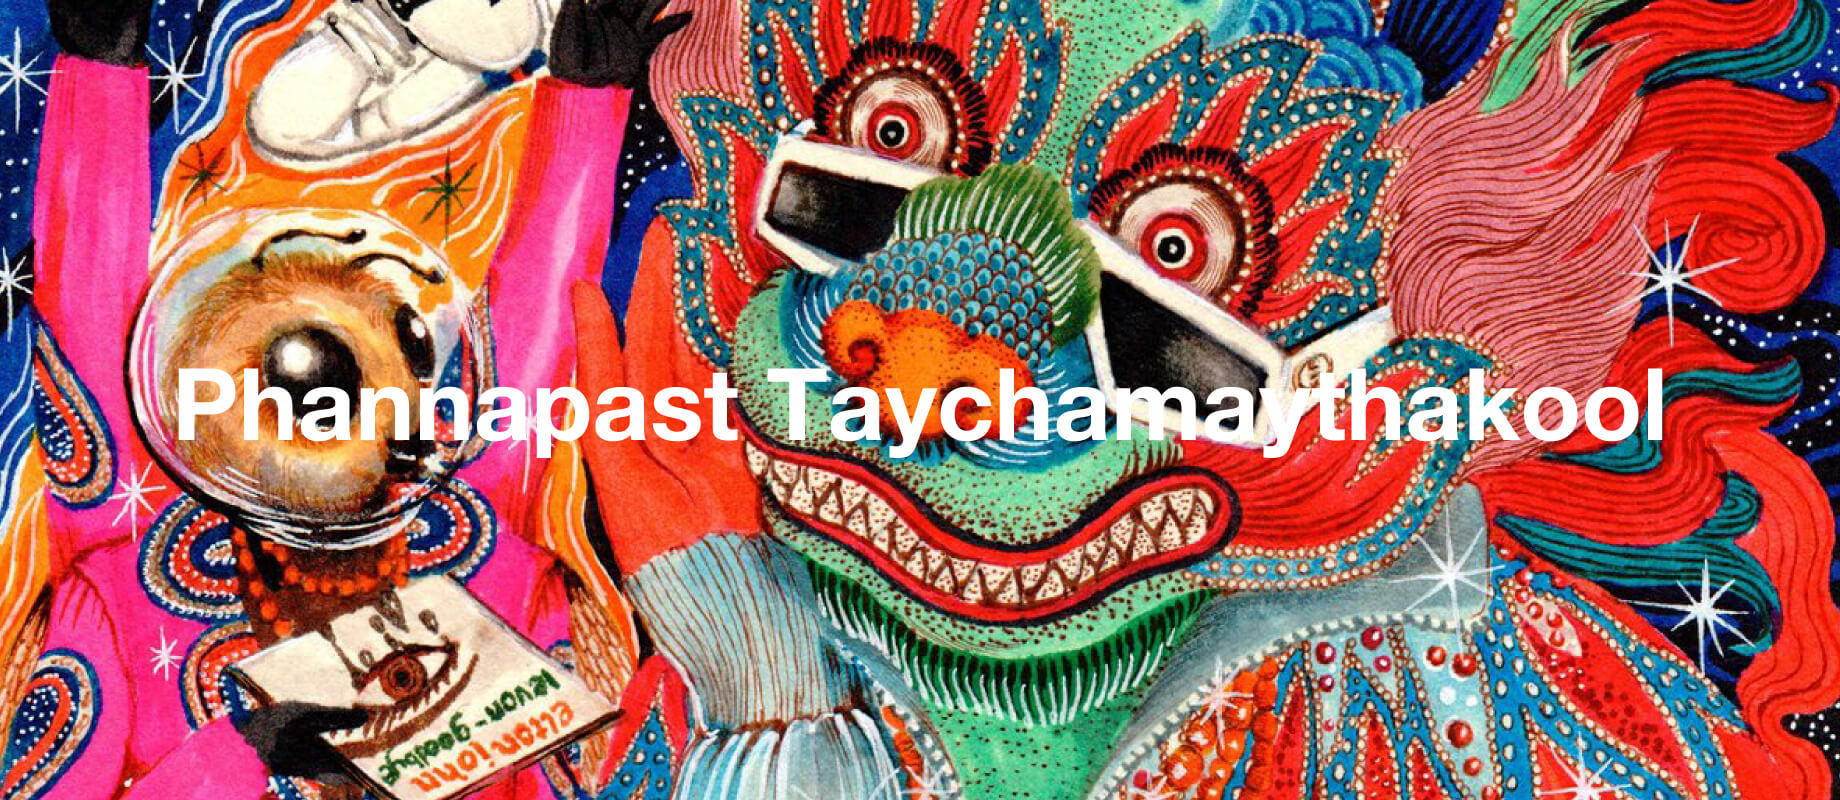 Phannapast Taychamaythakool